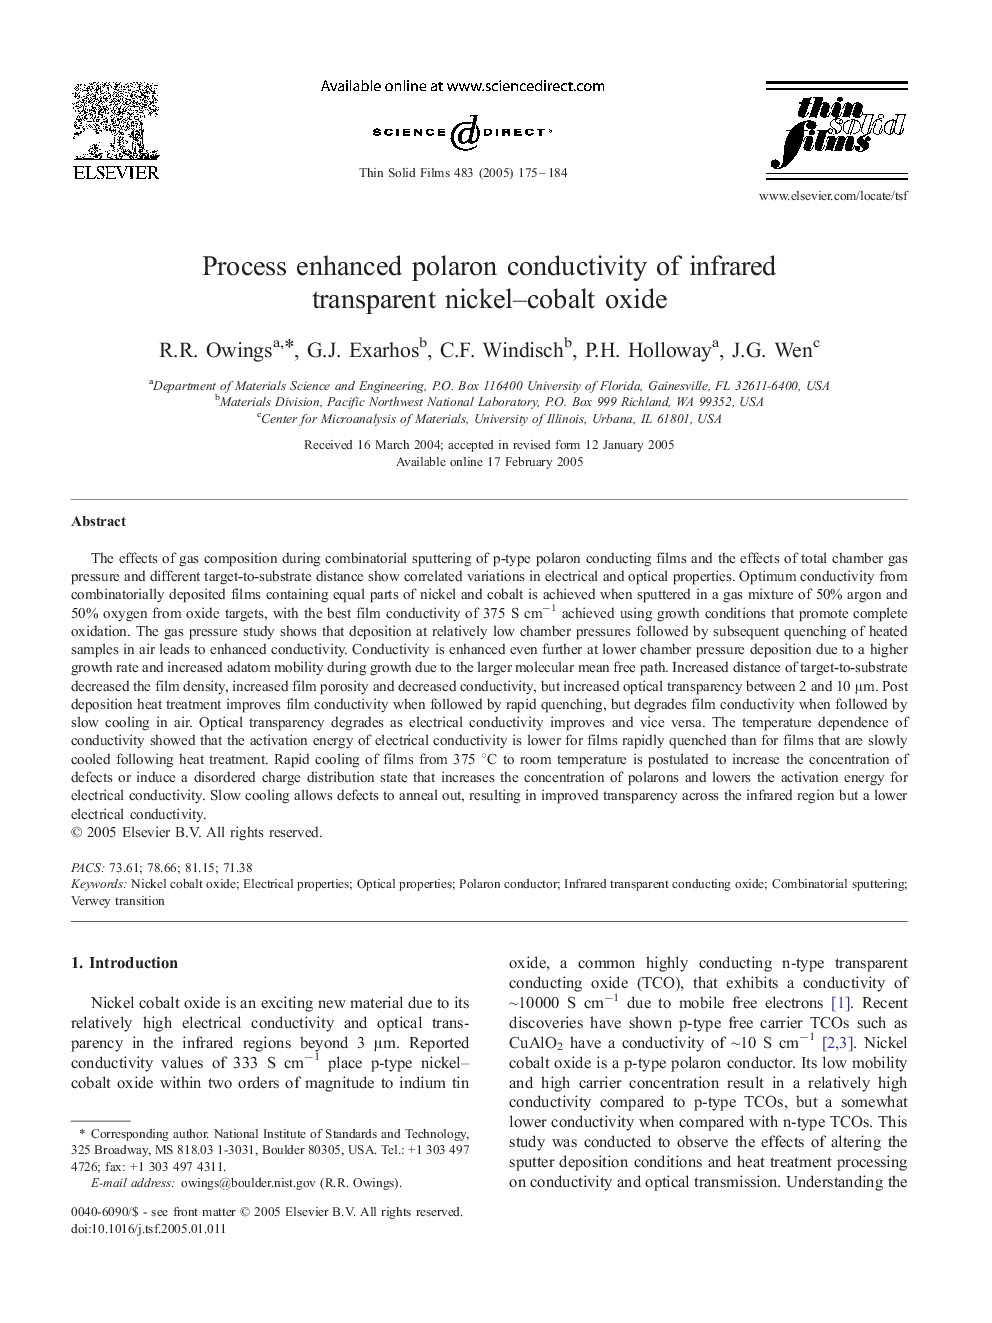 Process enhanced polaron conductivity of infrared transparent nickel-cobalt oxide